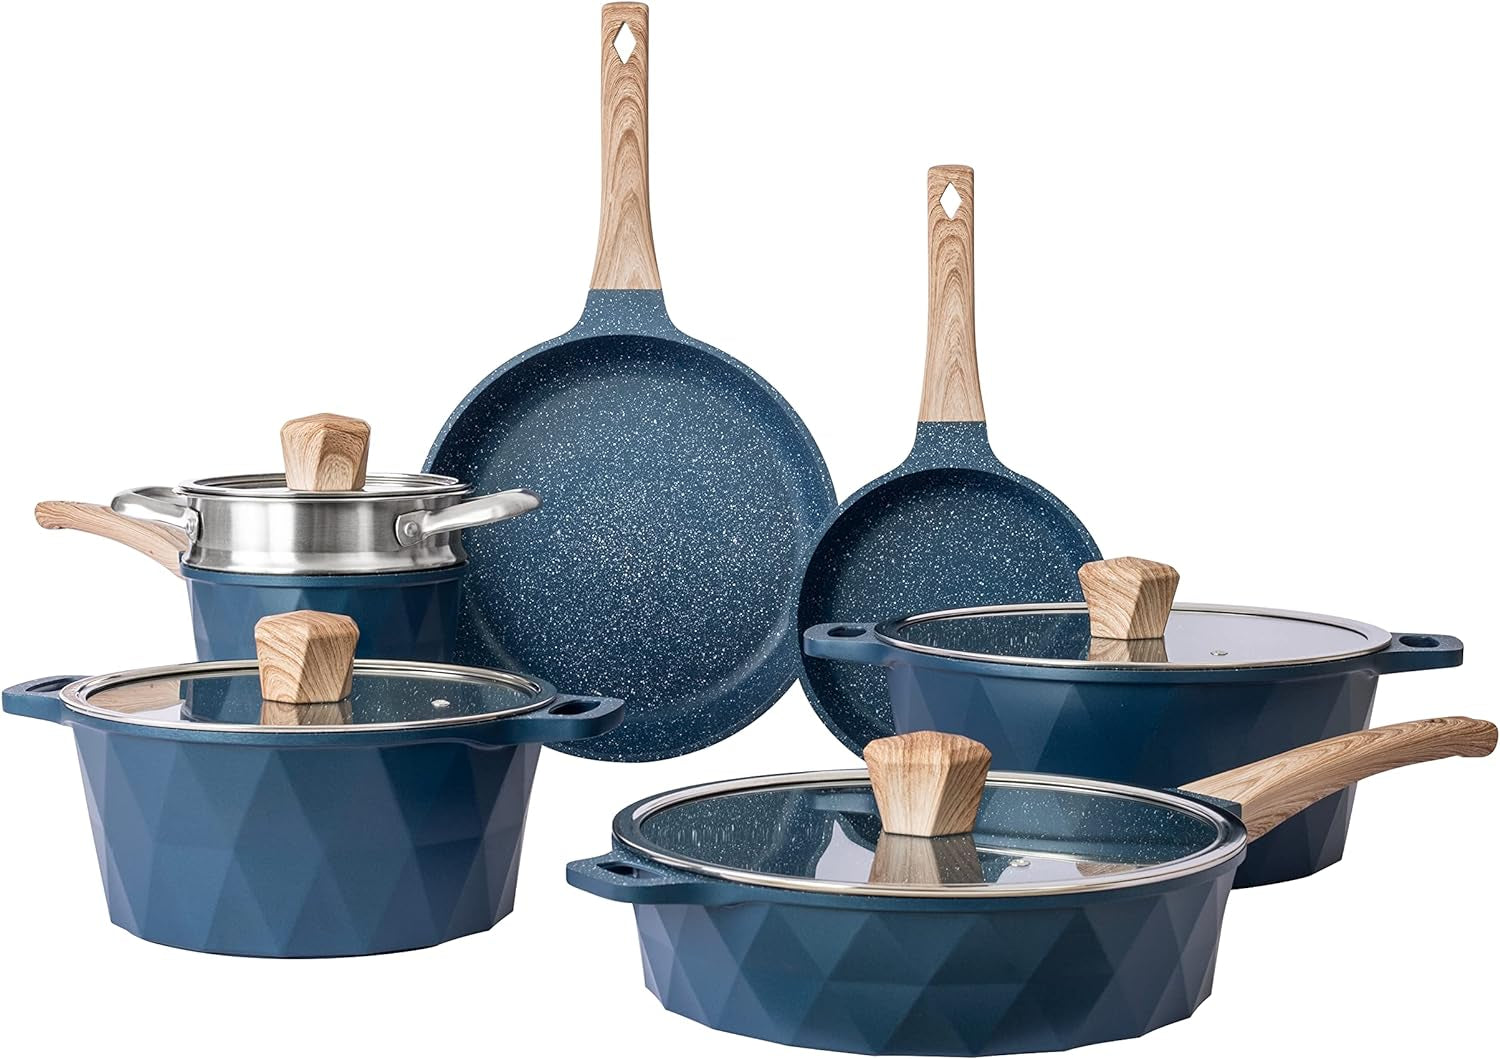 Induction Cookware Sets - 13 Piece Nonstick Cast Aluminum Pots and Pans with BAKELITE Handles, Glass Lids (Navy)